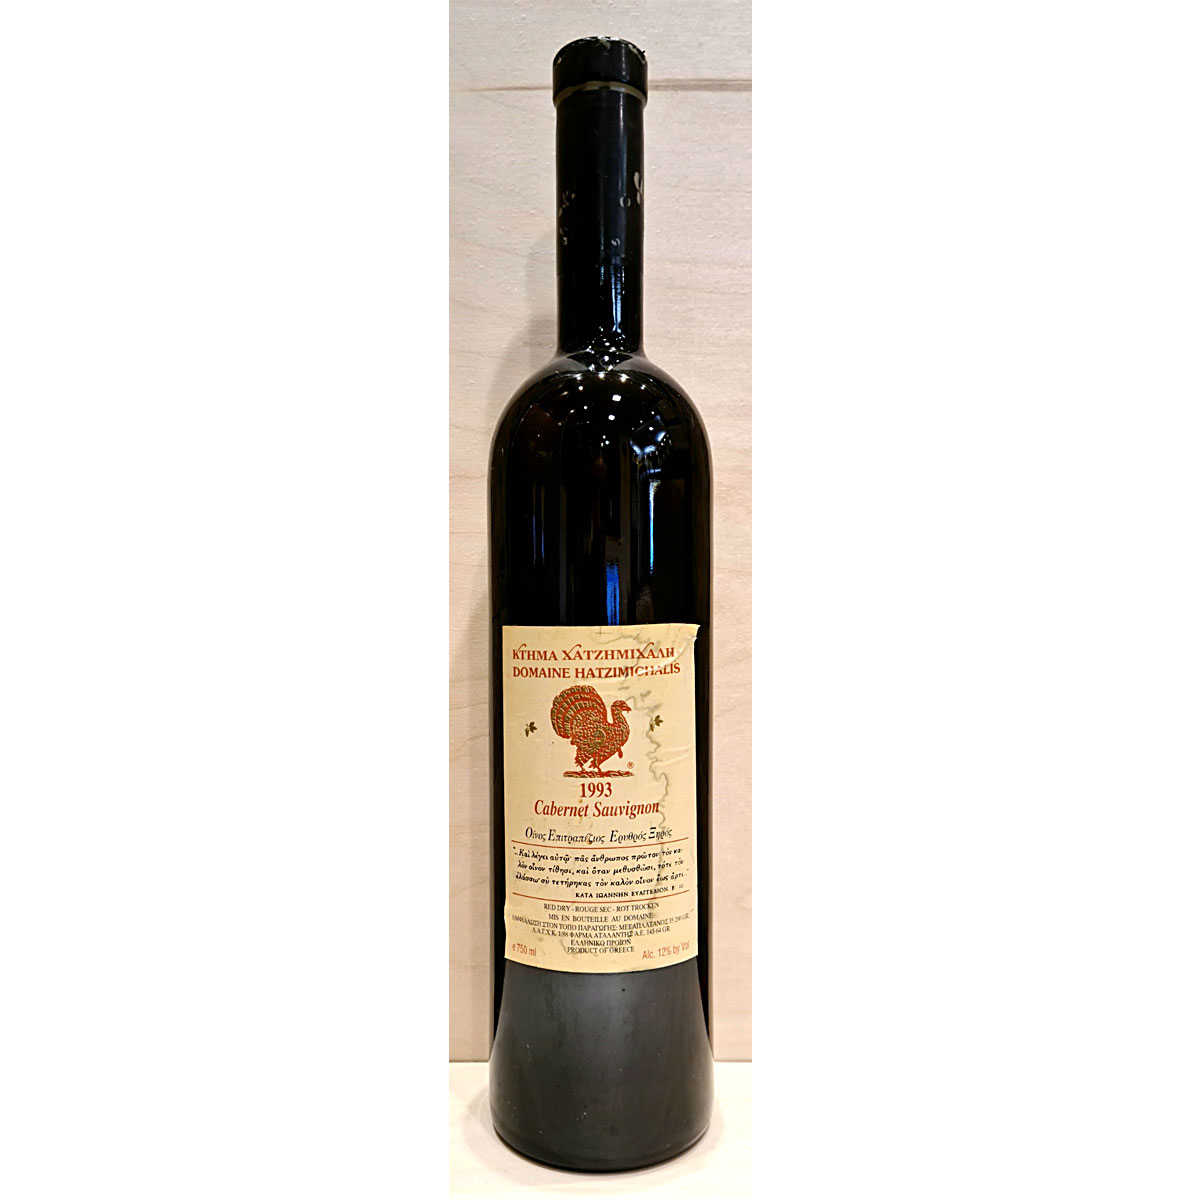 a bottle of ktima chatzimichali cabernet sauvignon 1993